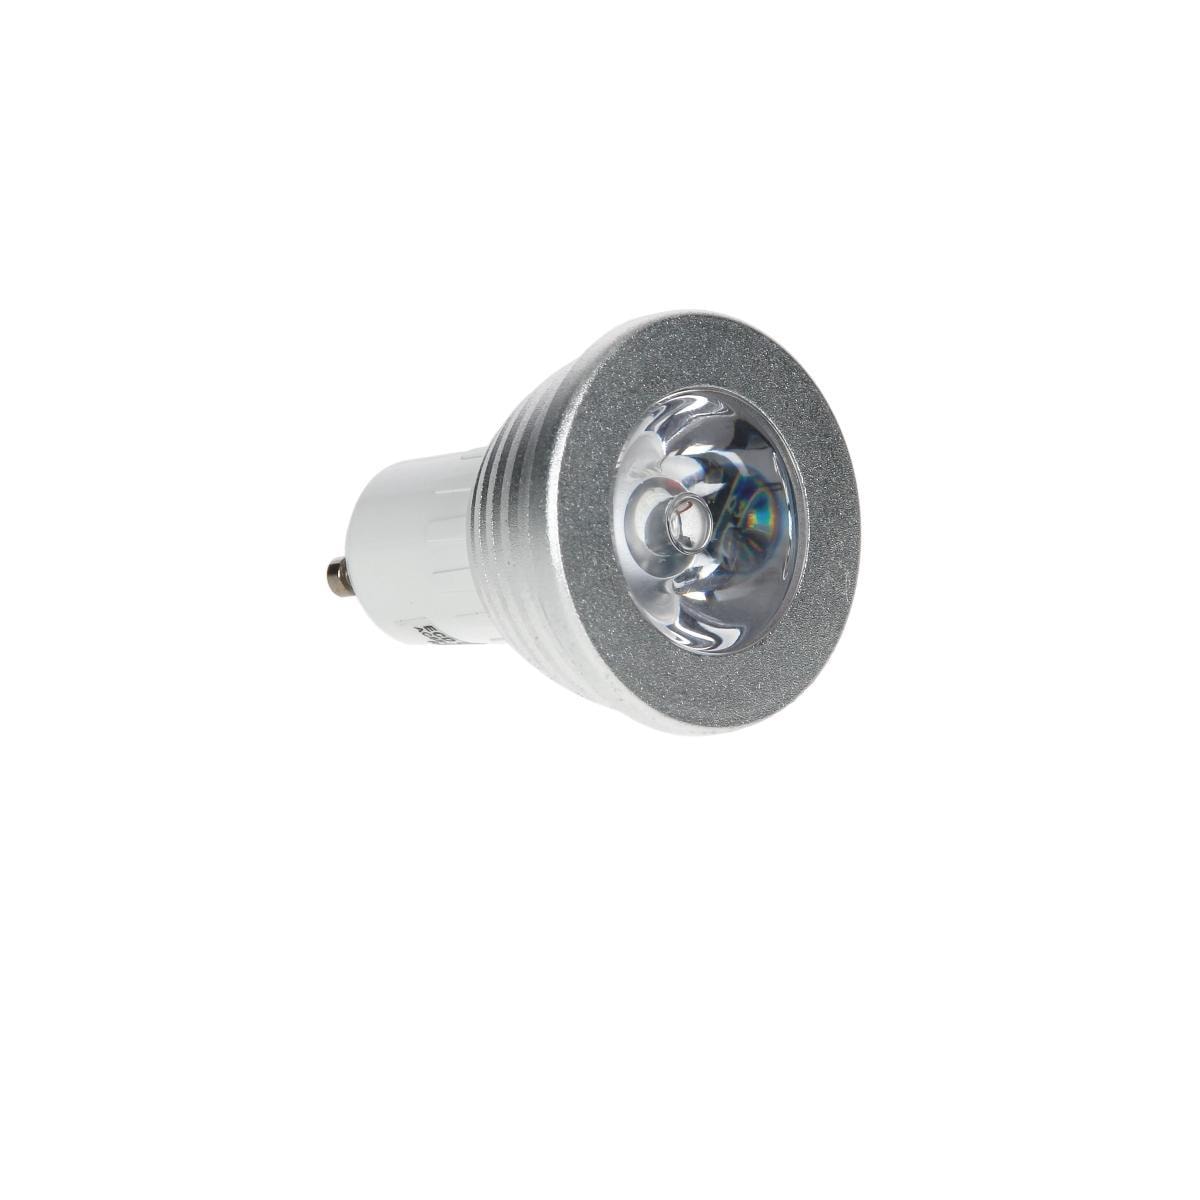 3W GU10 RGB LED Spot pære spotlight farveskift lampe belysning lampe |  Elgiganten